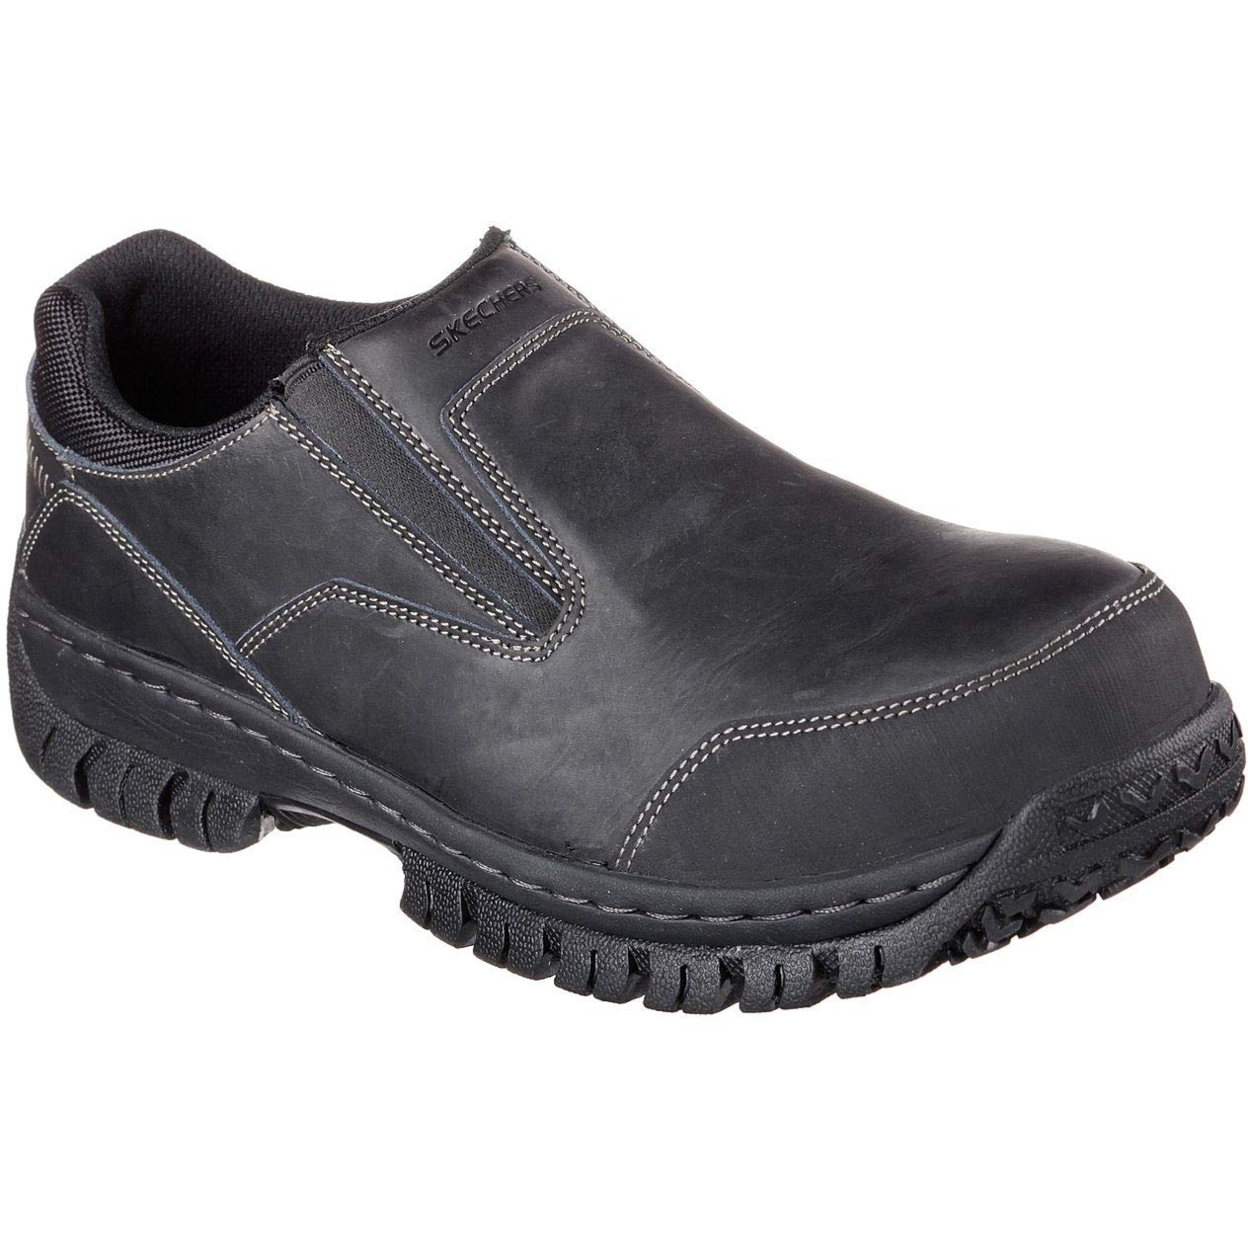 Skechers For Work Men's Hartan Steel Toe Slip-On Shoe Varies BLACK - BLACK, 8